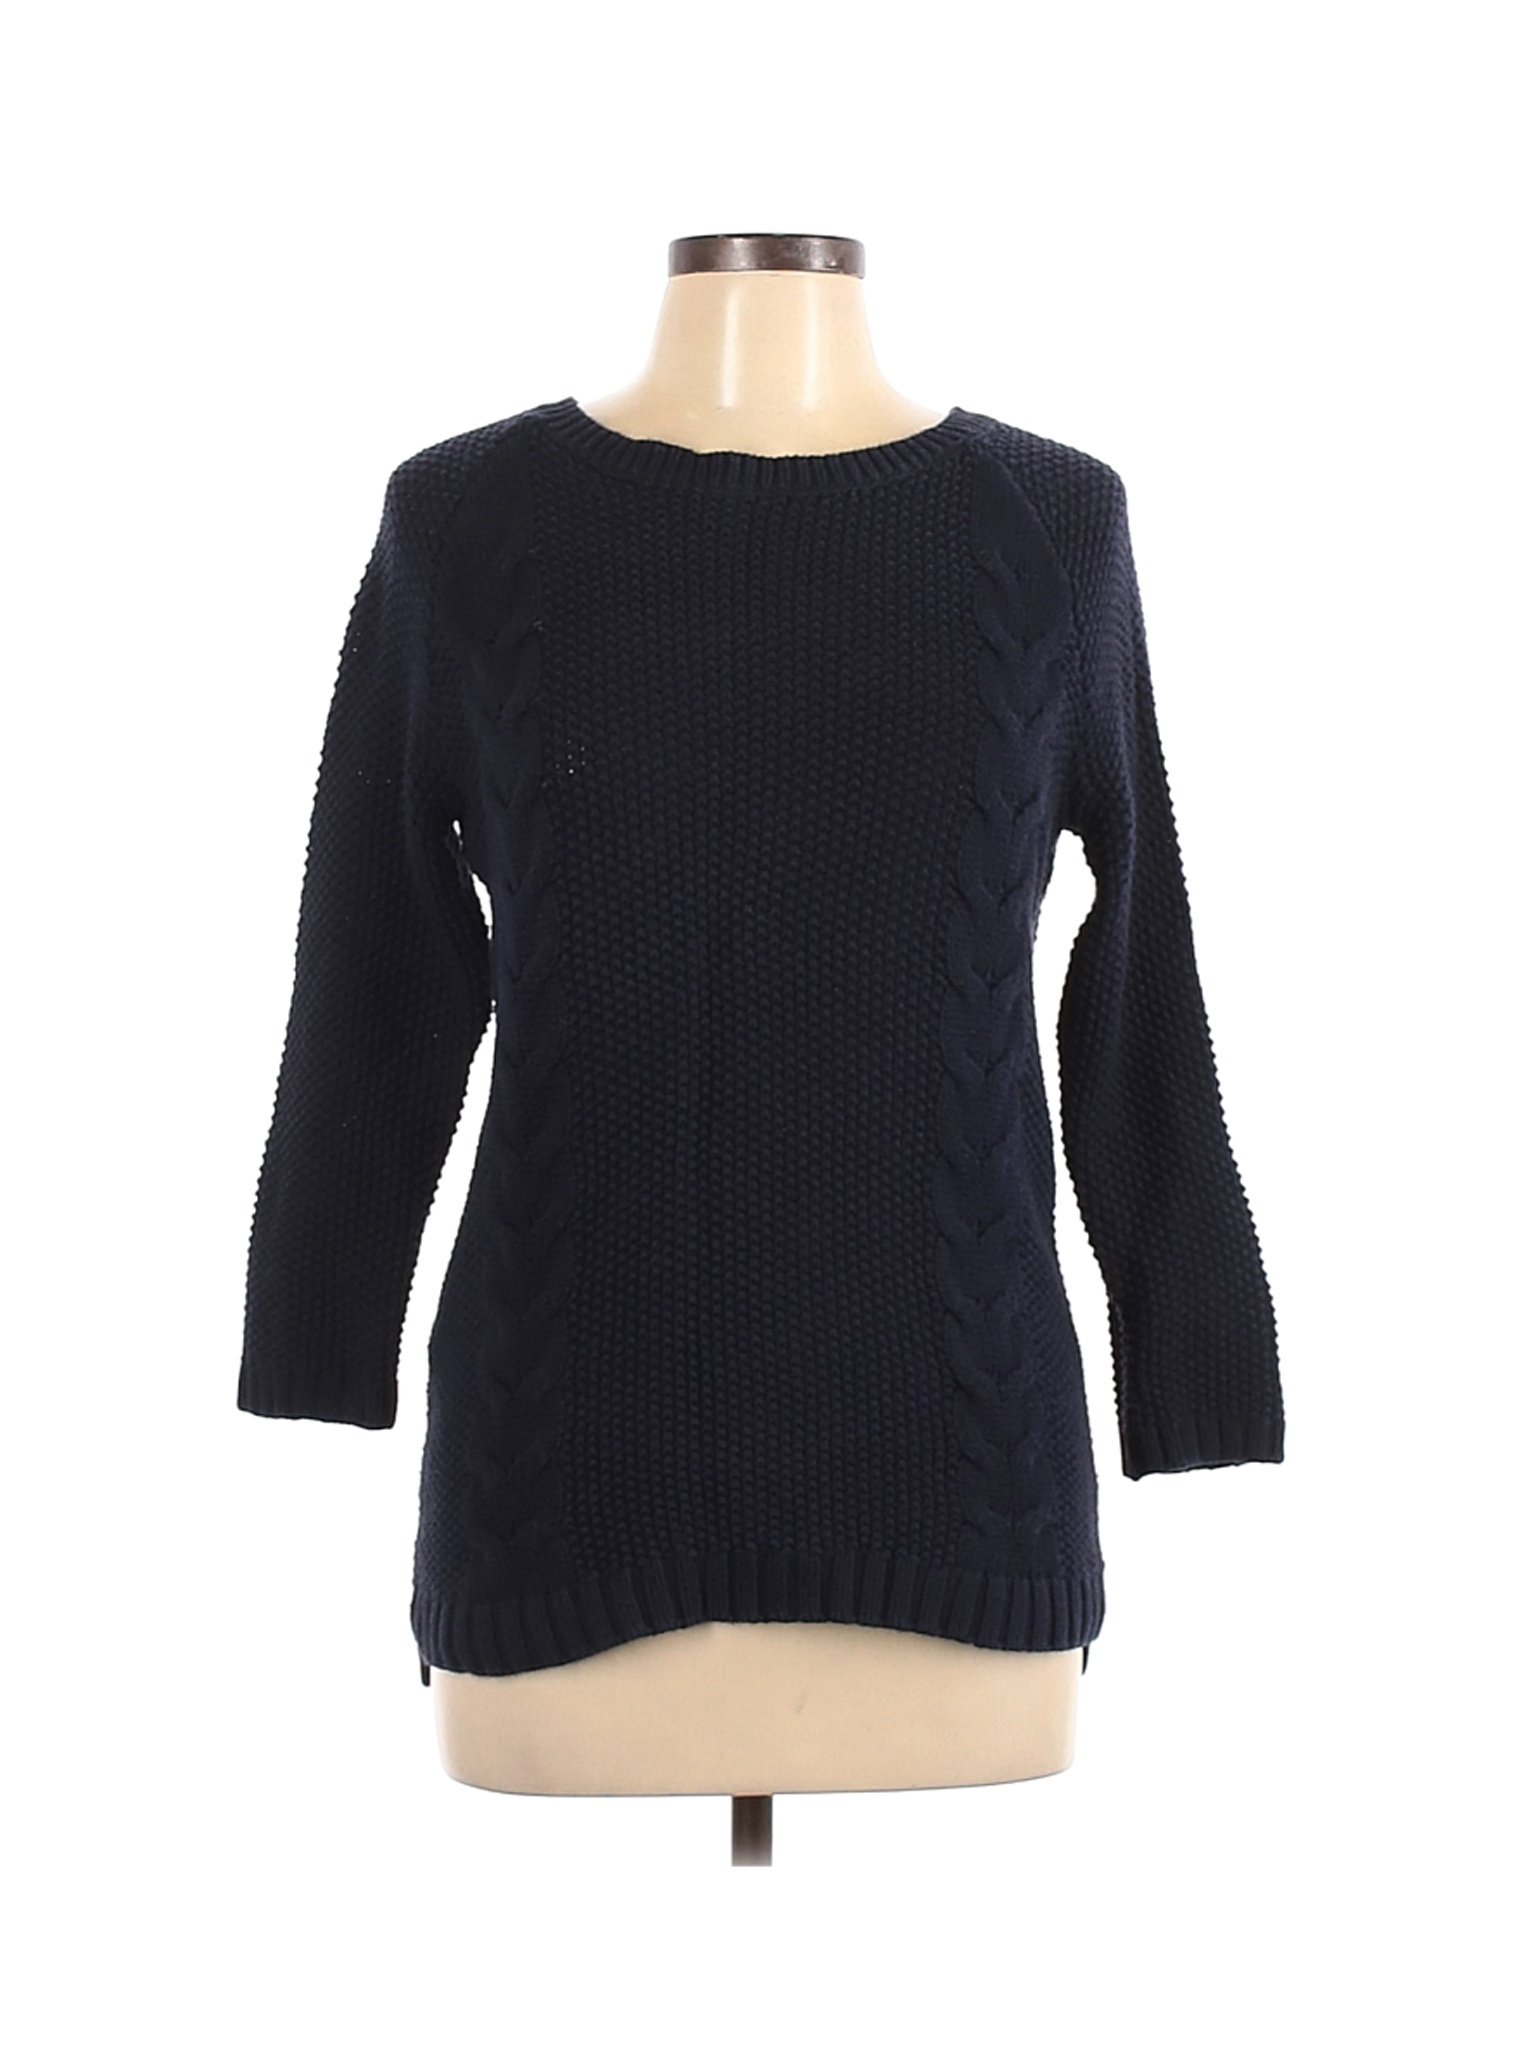 Cynthia Rowley TJX Women Black Pullover Sweater L | eBay